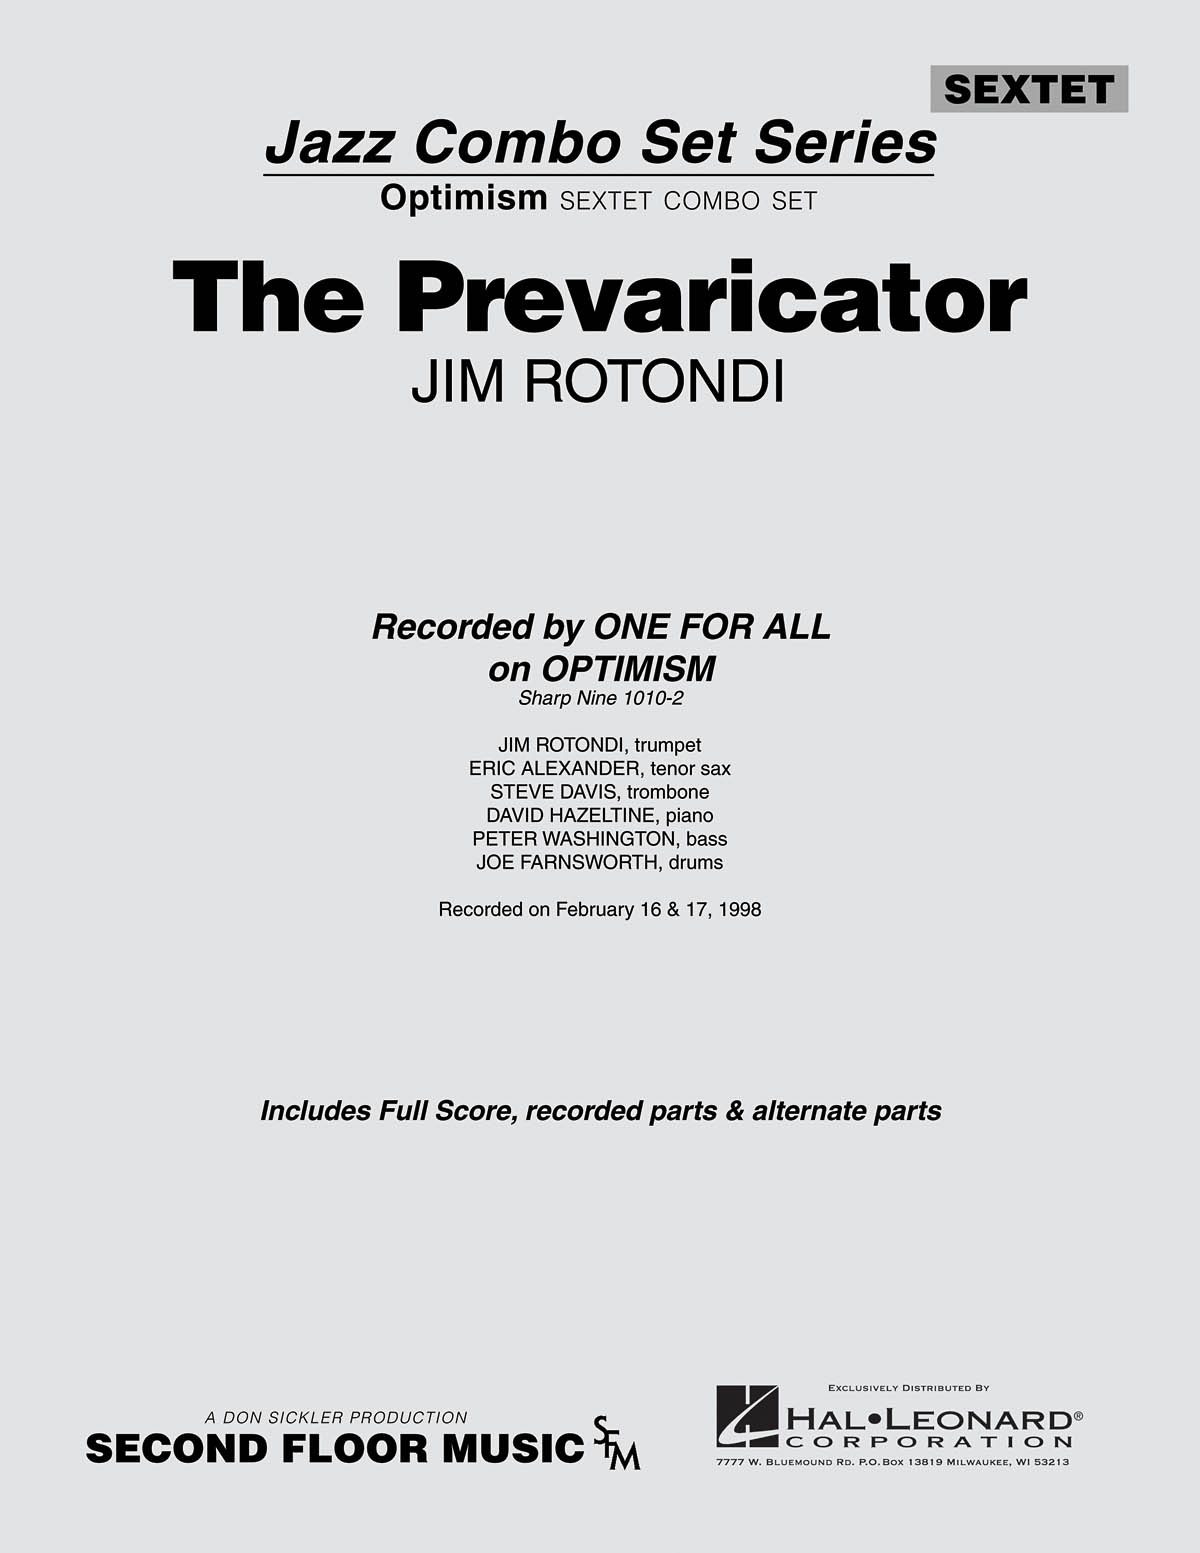 The Prevaricator